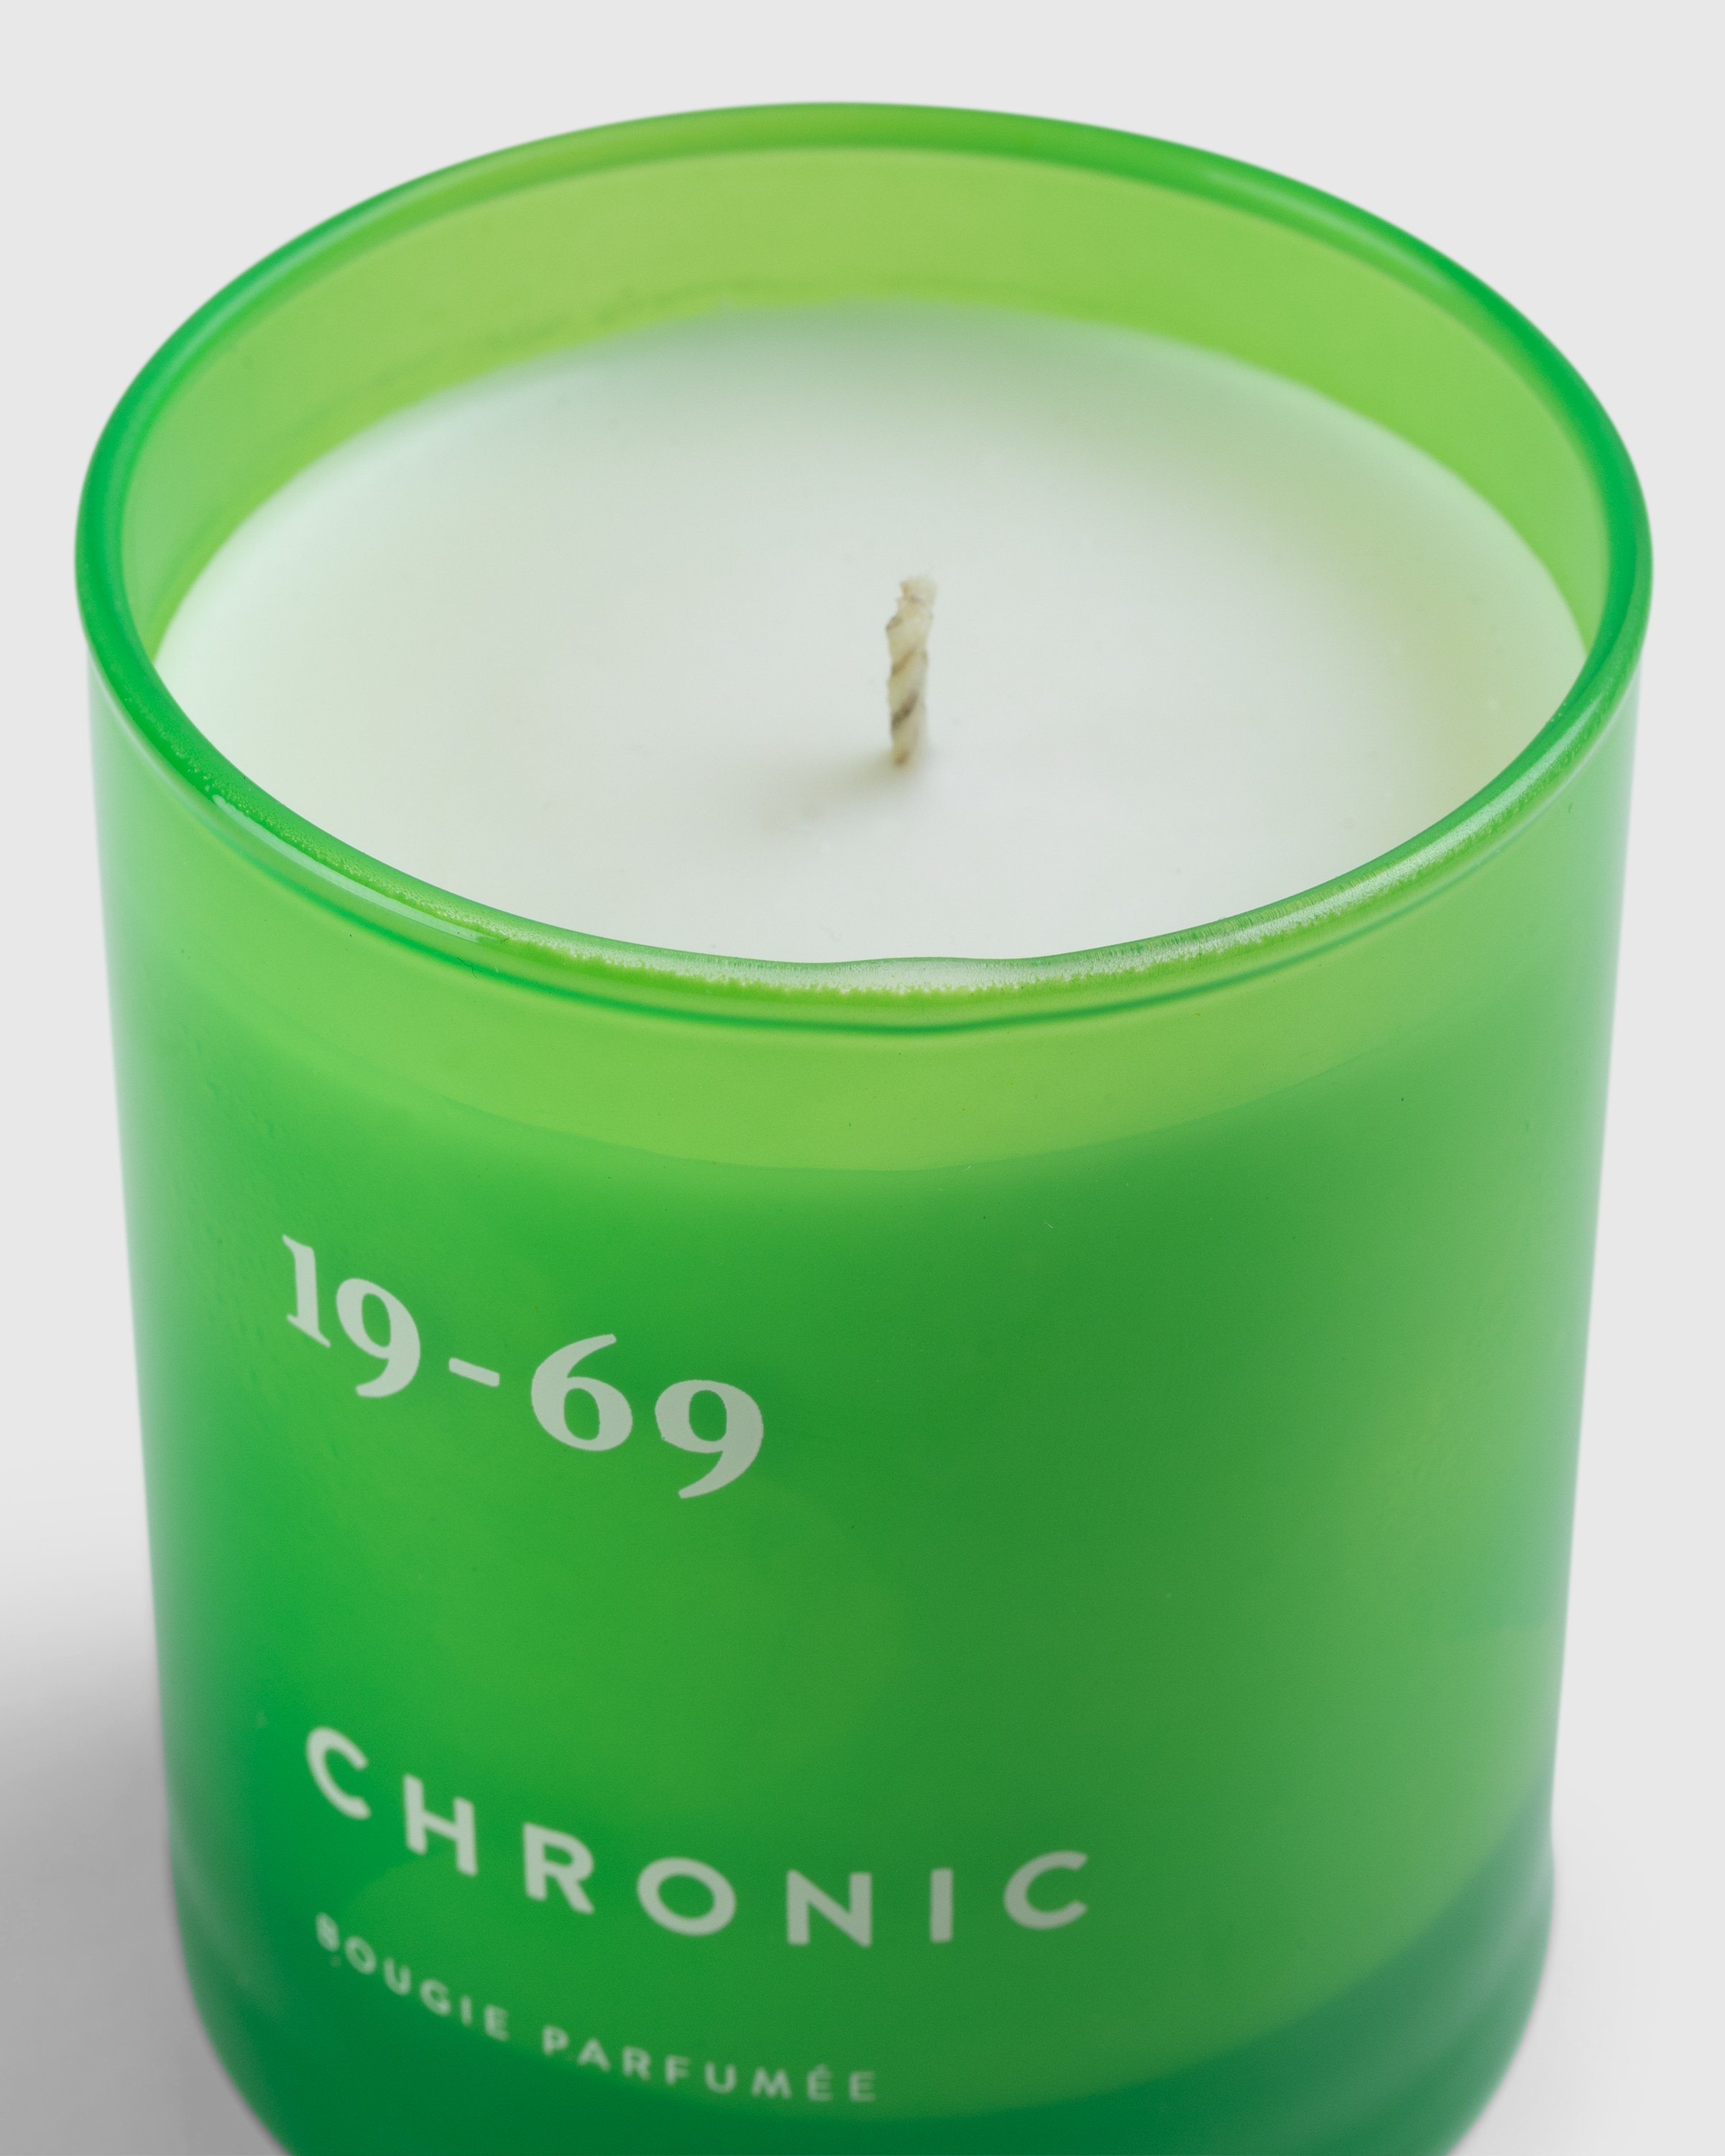 19-69 - Chronic BP Candle - Lifestyle - Green - Image 3